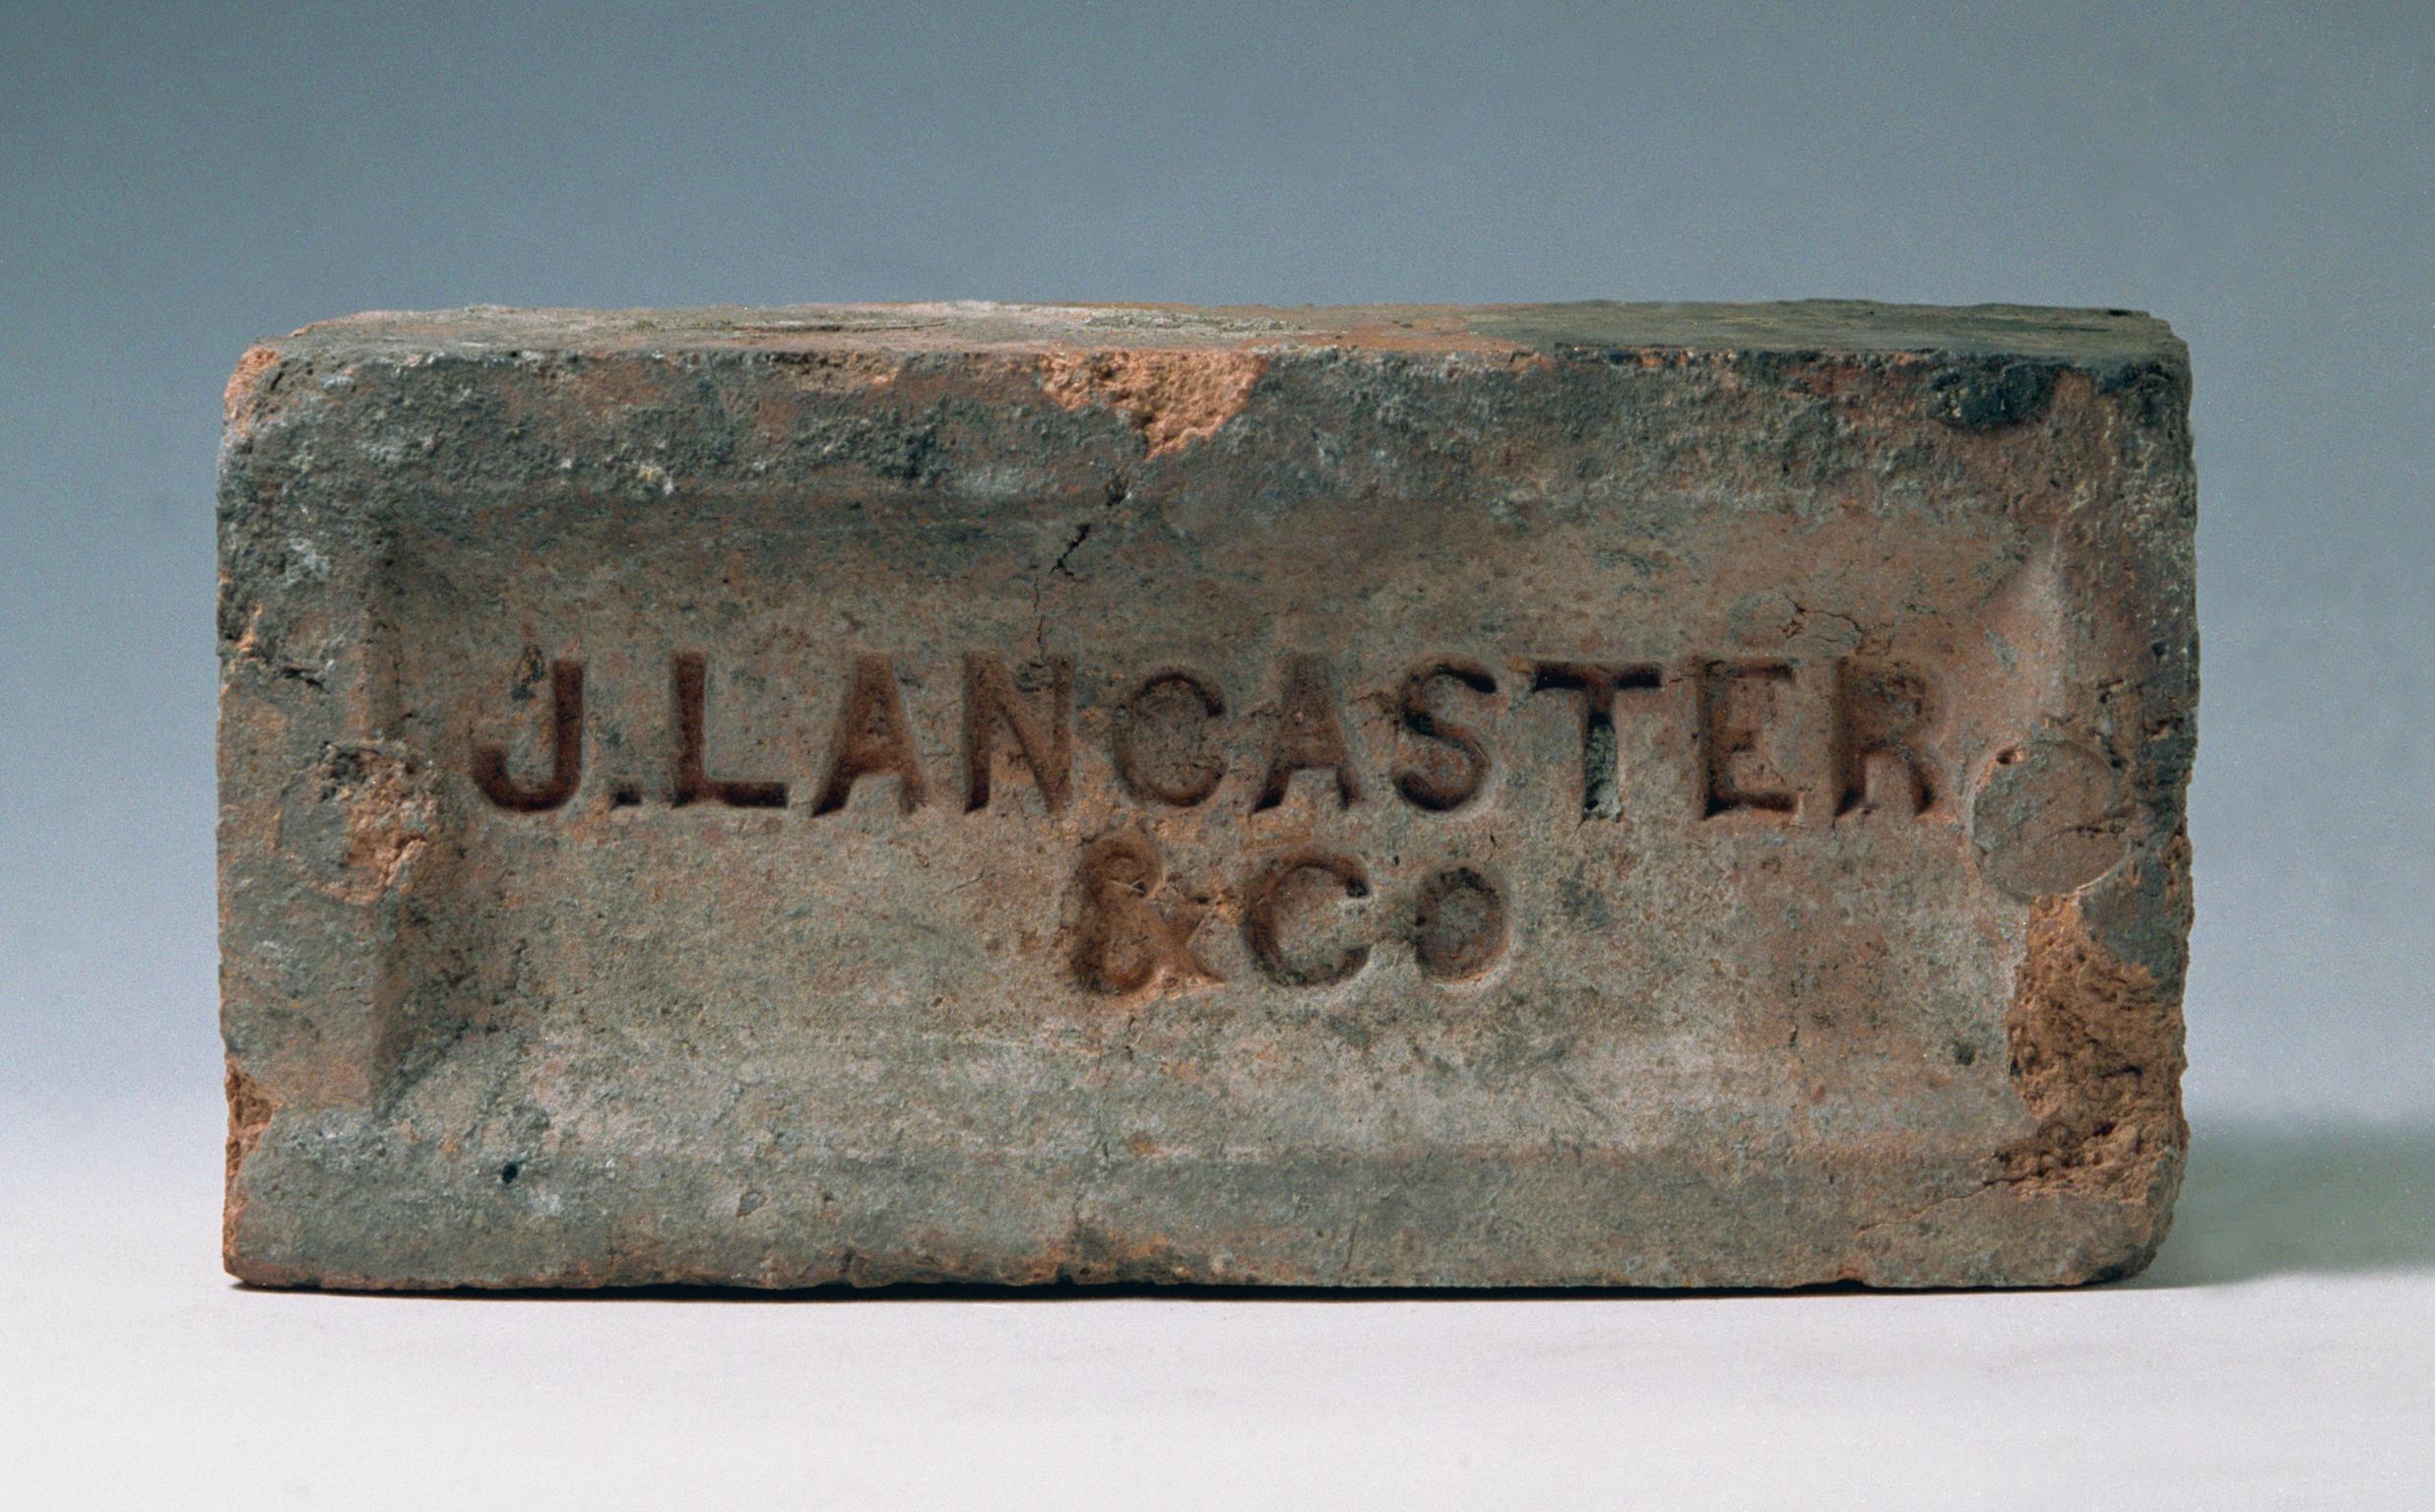 J. Lancaster & Co., brick